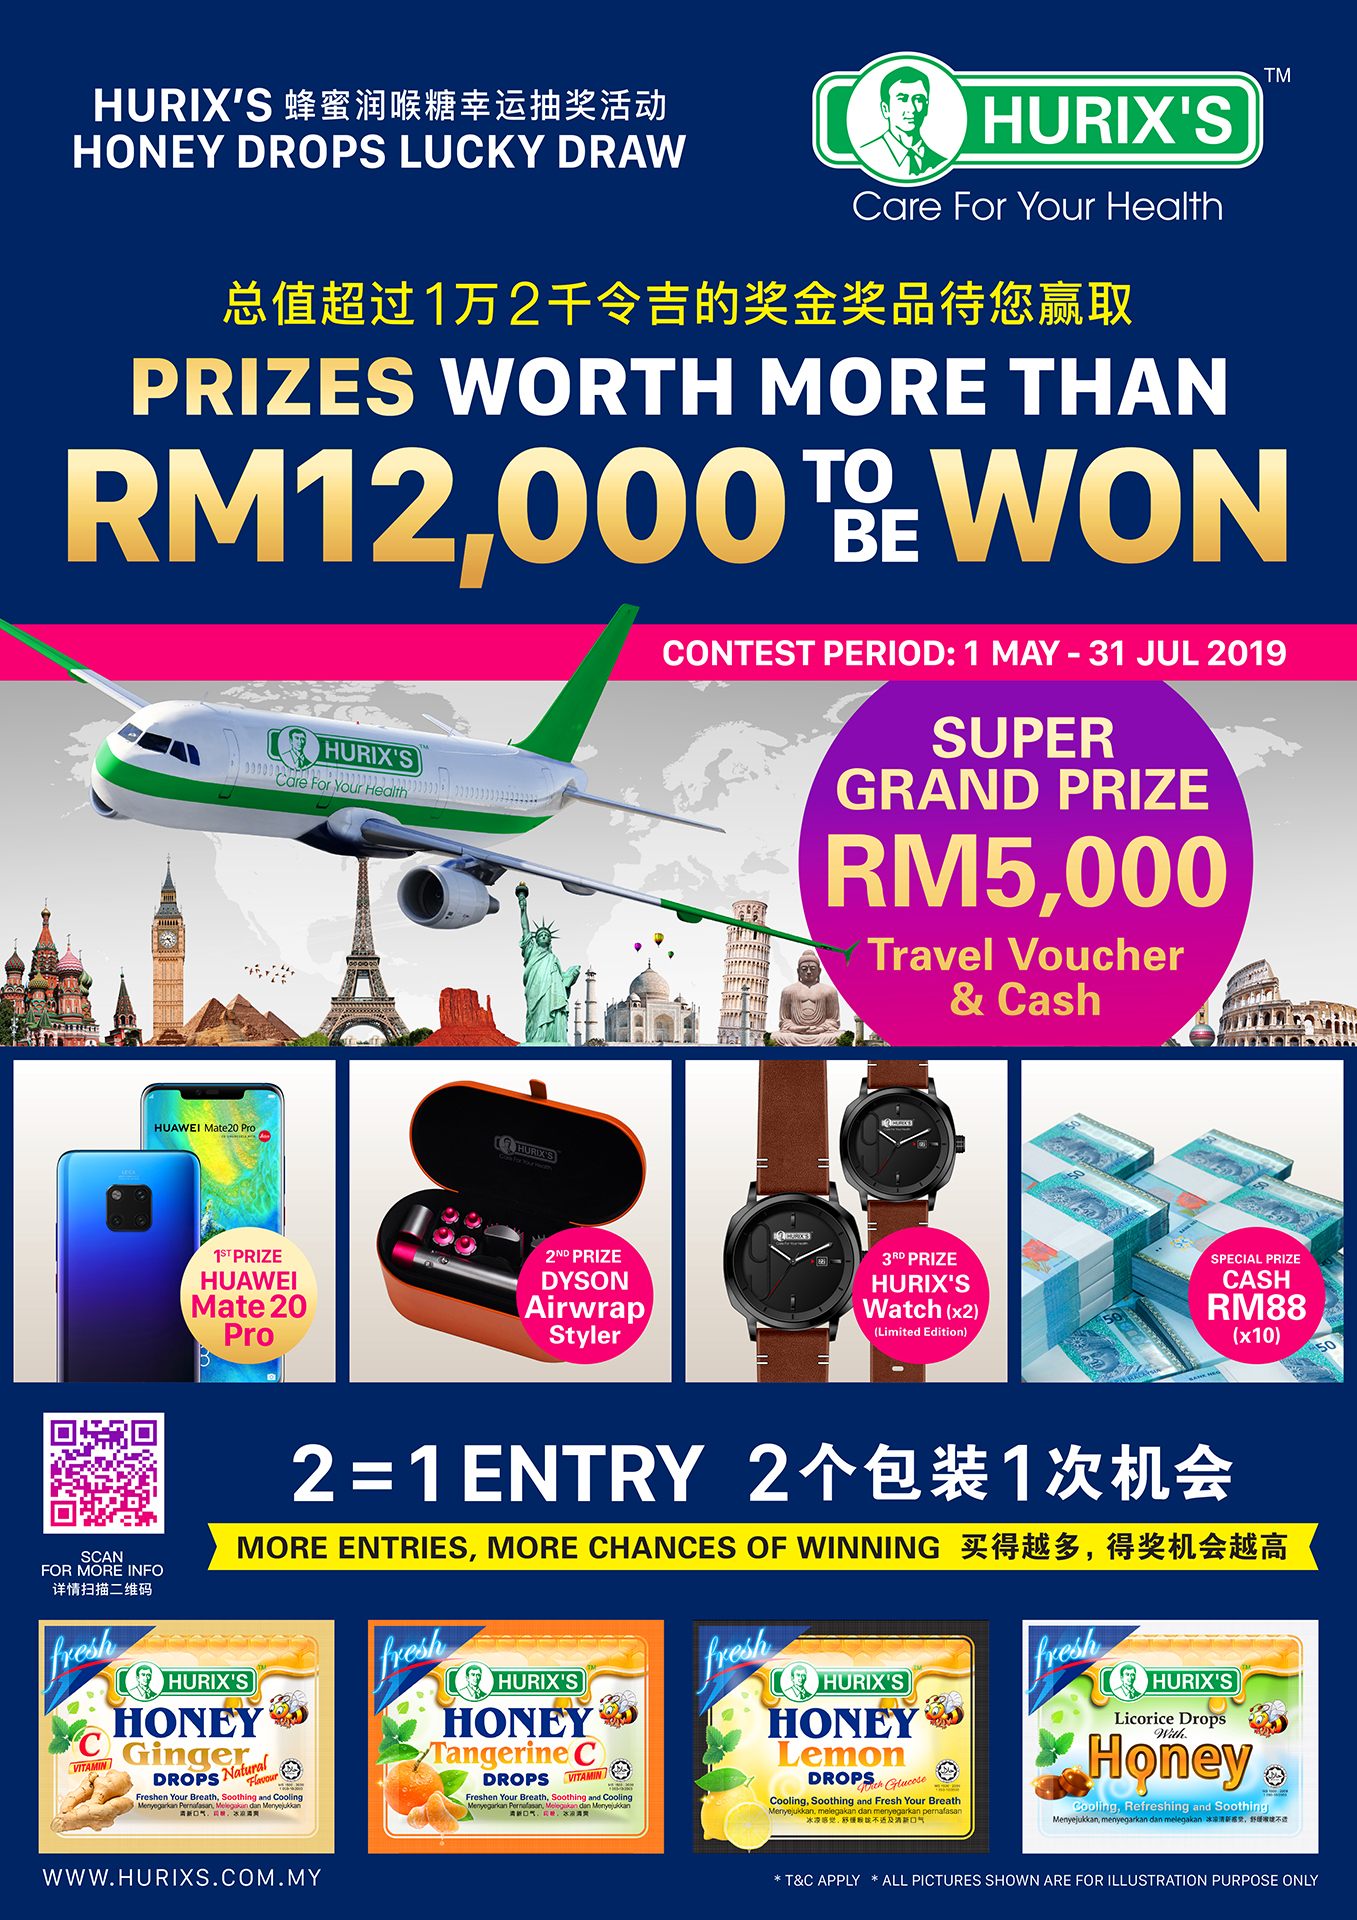 Hurixs: Win Travel Voucher + Cash worth RM5,000.00 